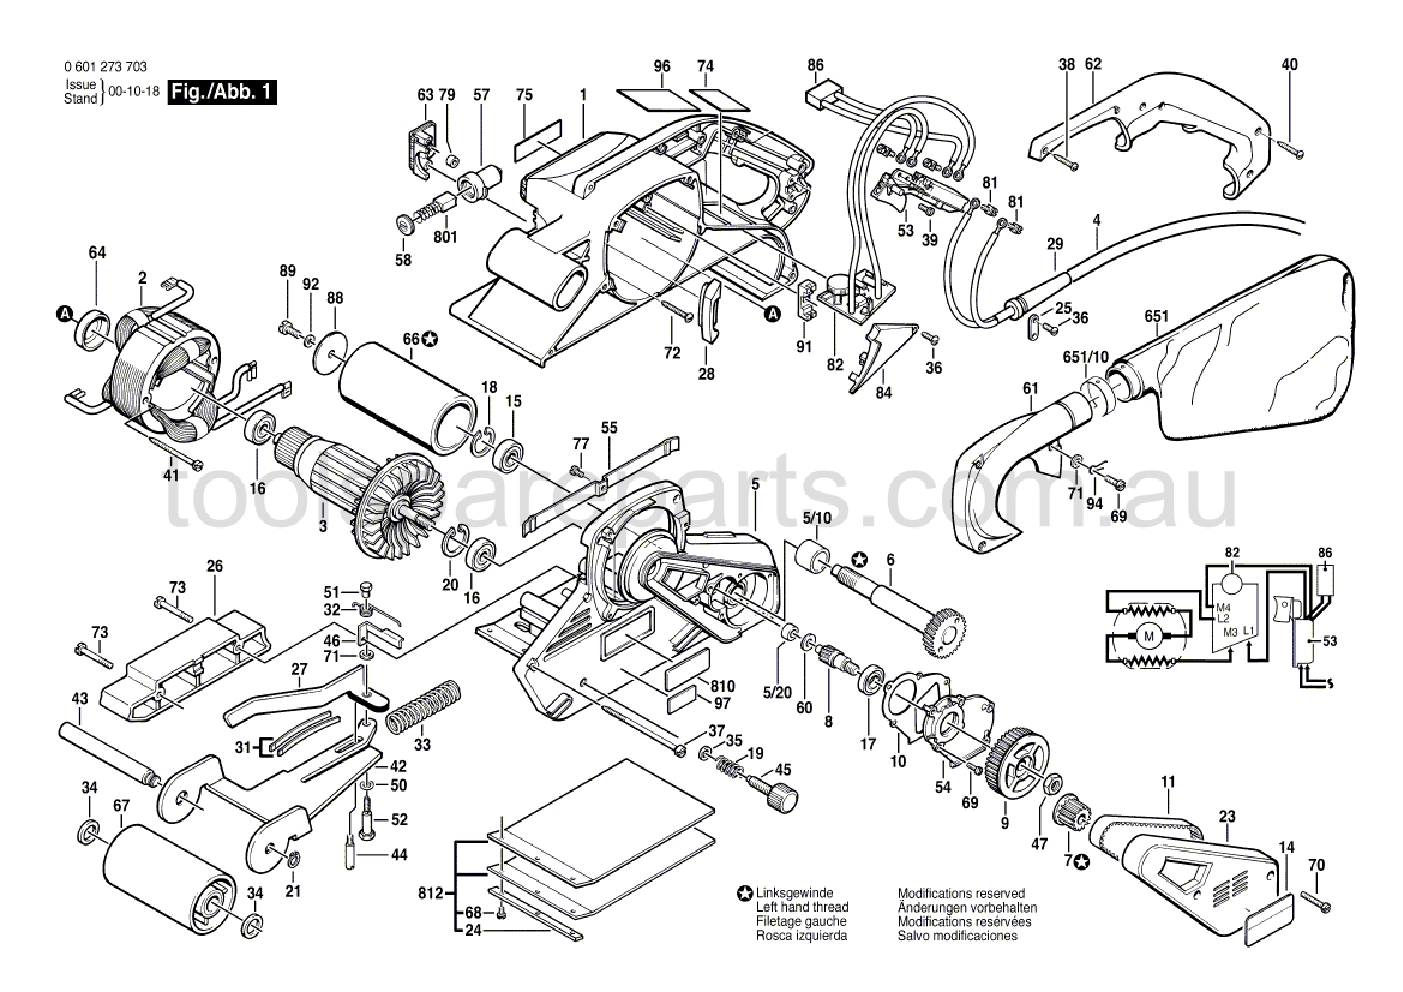 Bosch GBS 100 AE 0601273737  Diagram 1